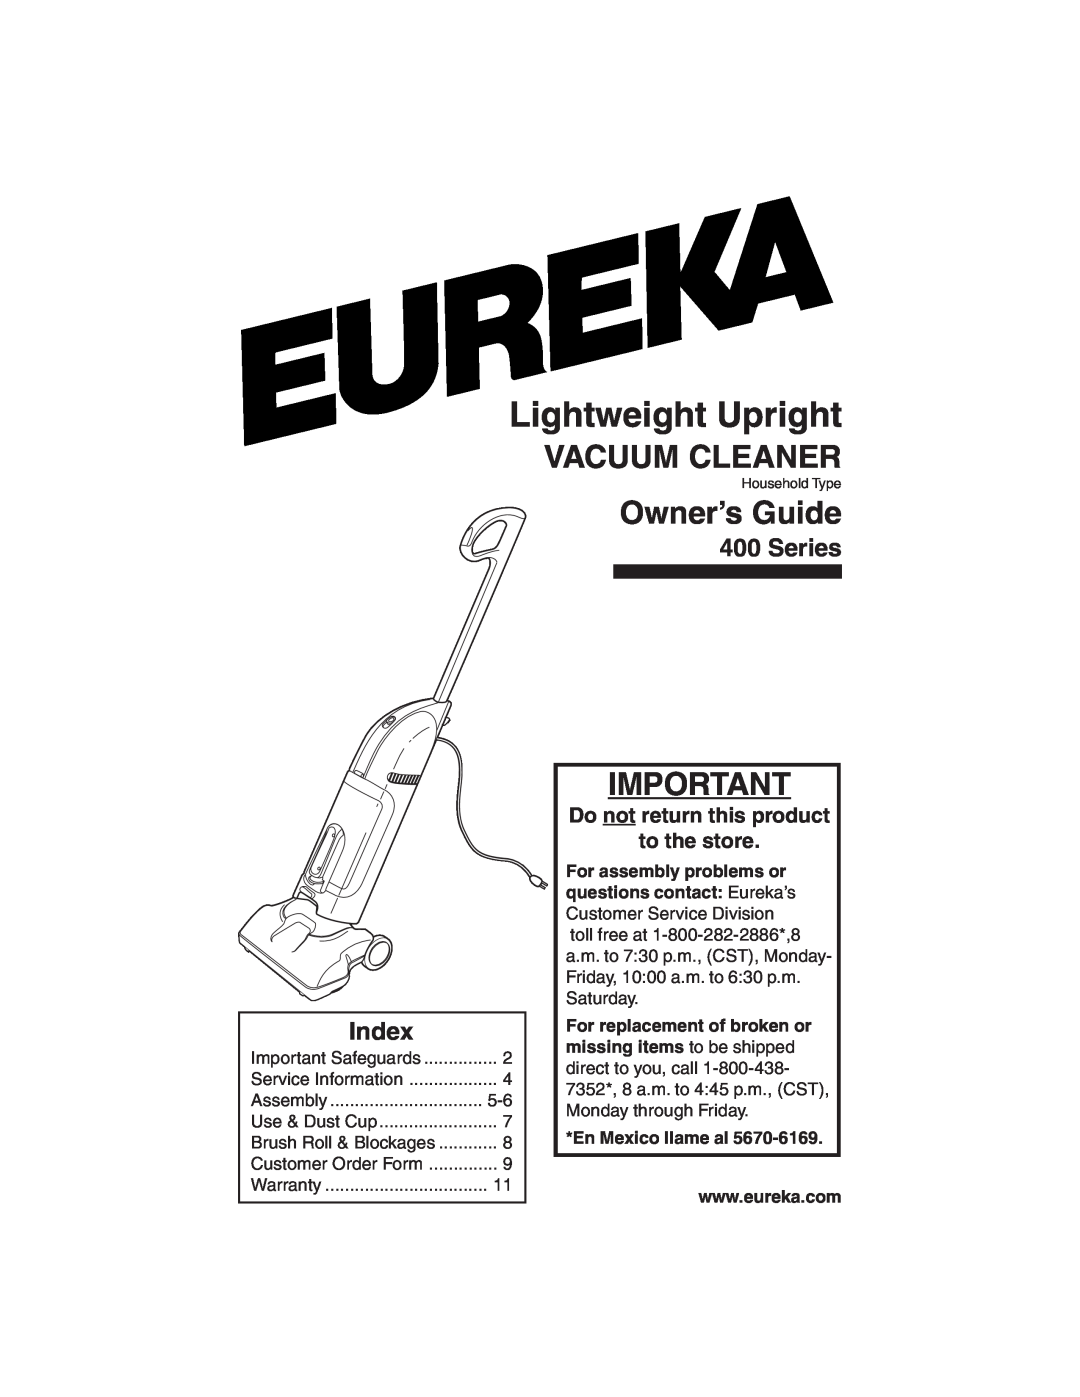 Eureka warranty Lightweight Upright, OWNERʼS GUIDE 400 Series, Index, Please Retain, Household Type, En Mexico llame al 